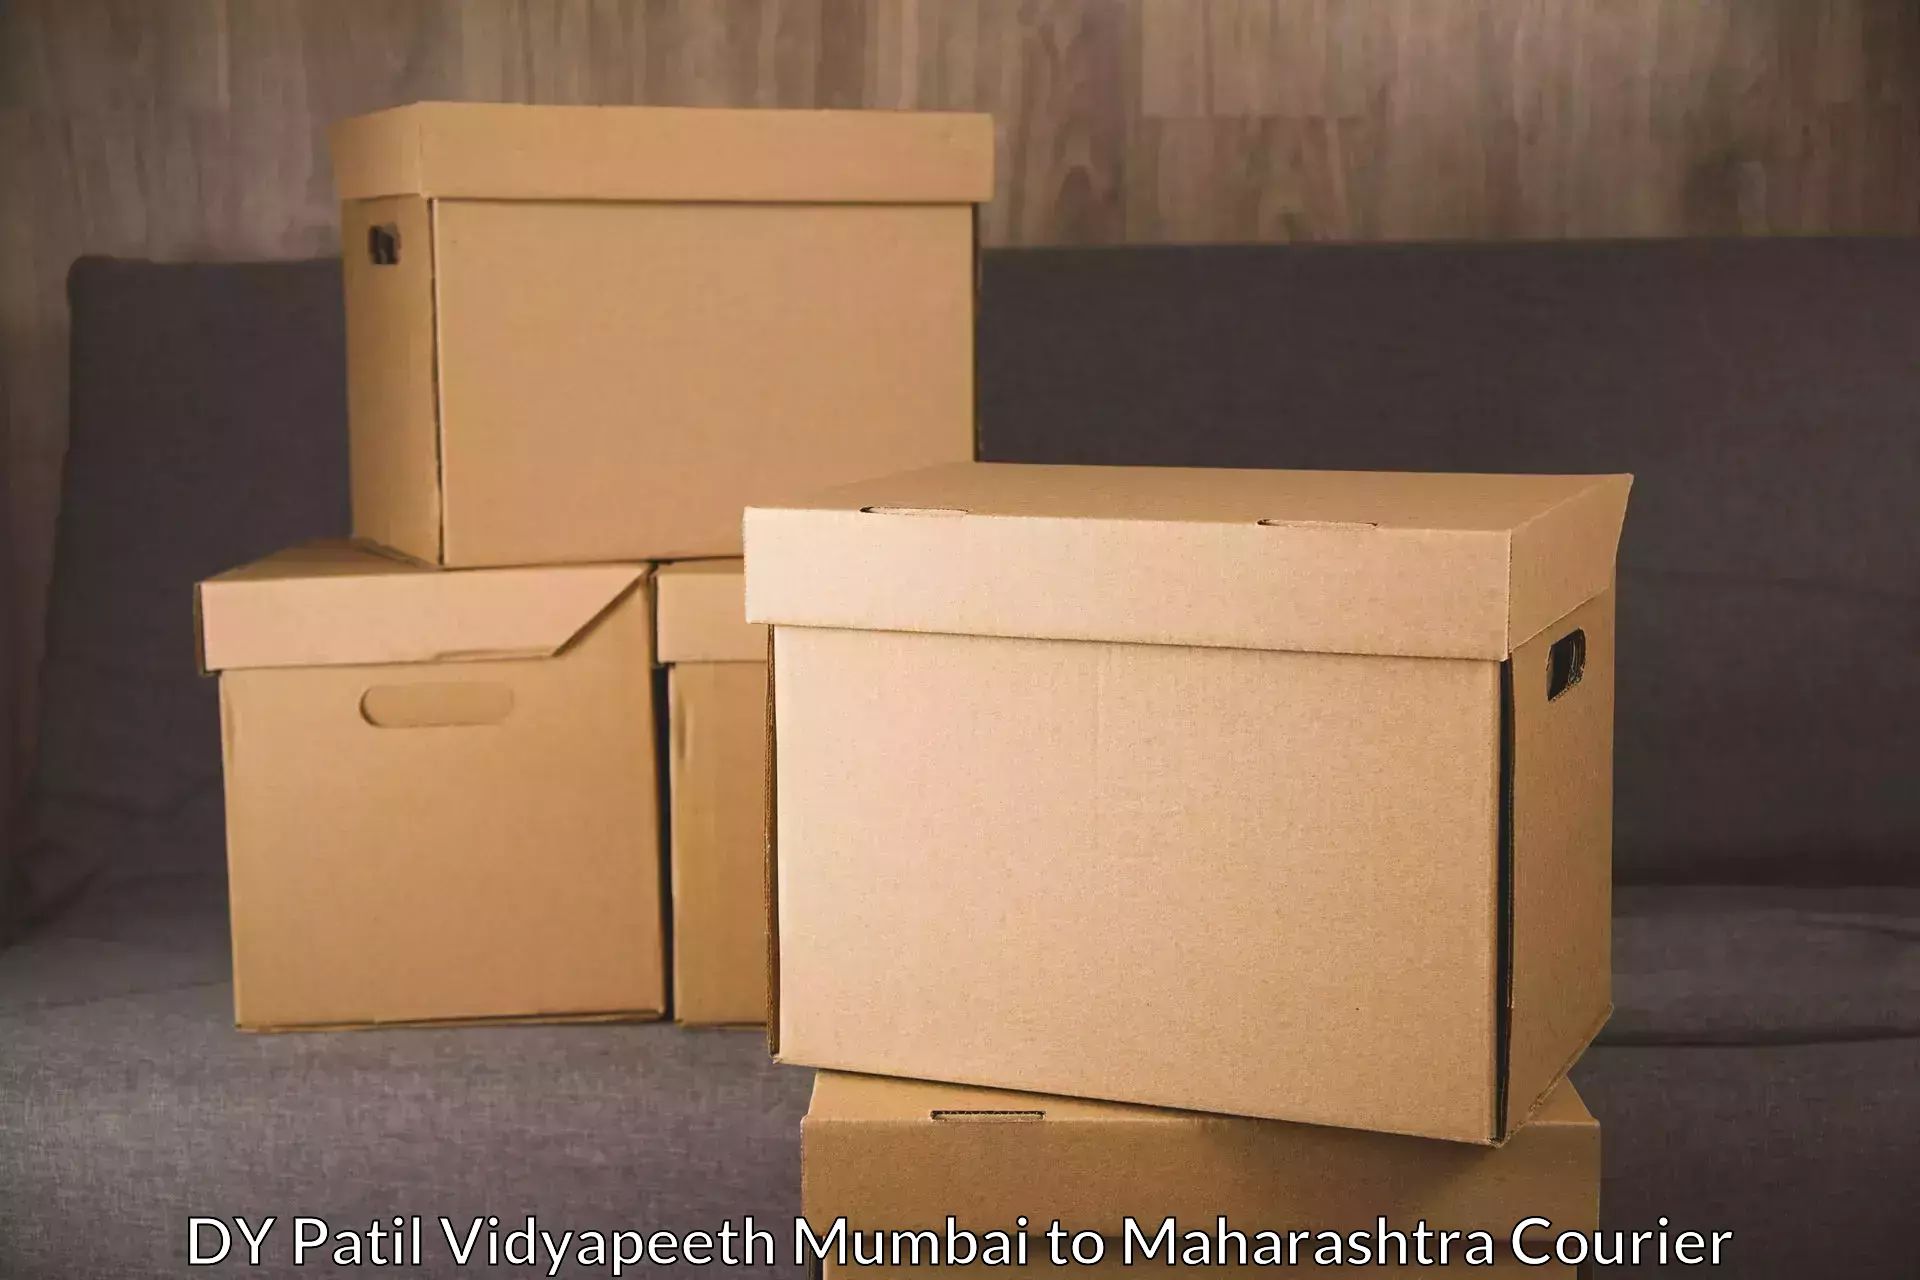 End-to-end delivery DY Patil Vidyapeeth Mumbai to Nira